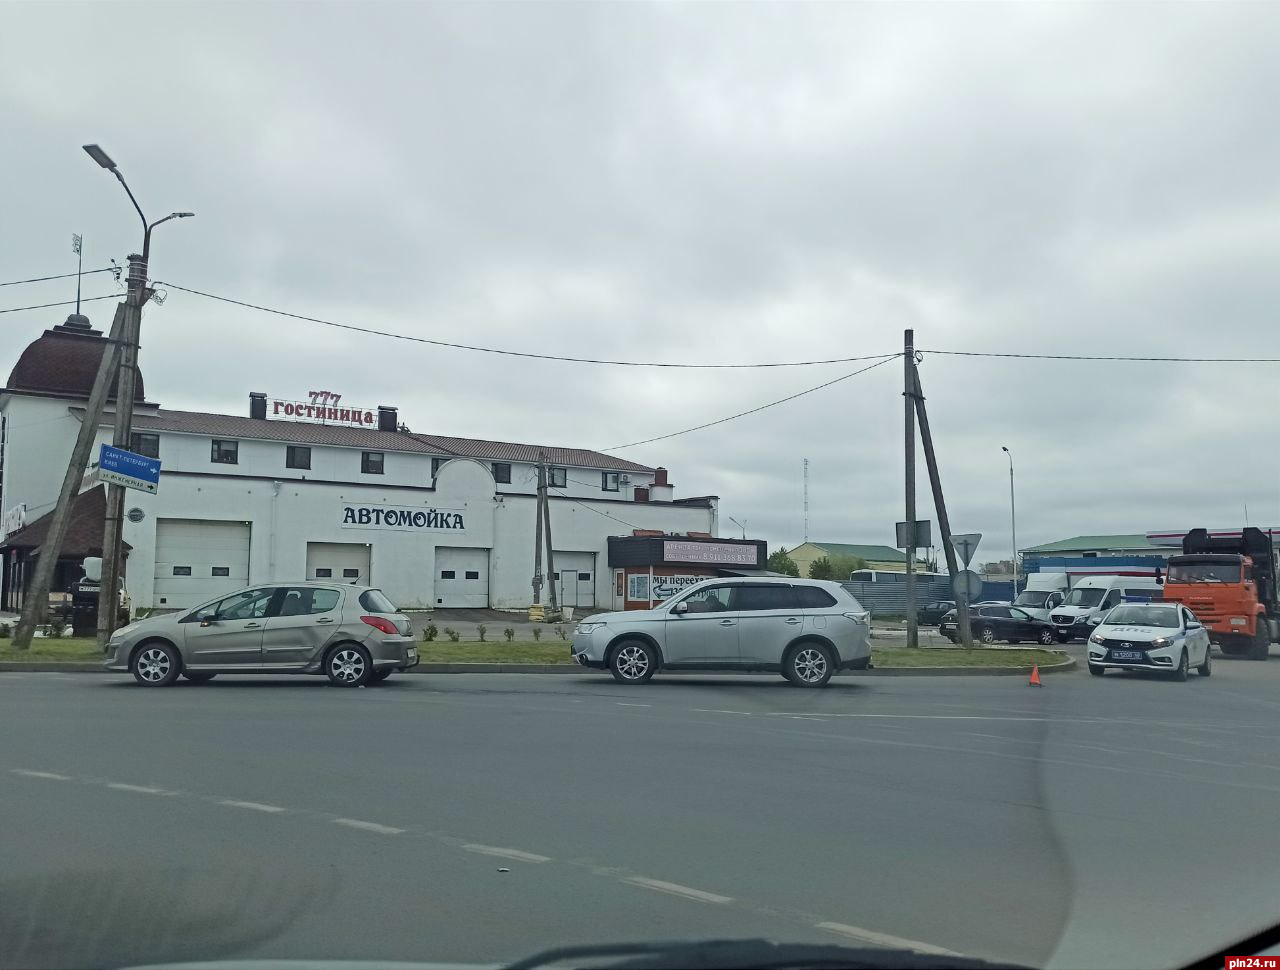 Mitsubishi и Peugeot столкнулись на круговом перекрестке на Запсковье